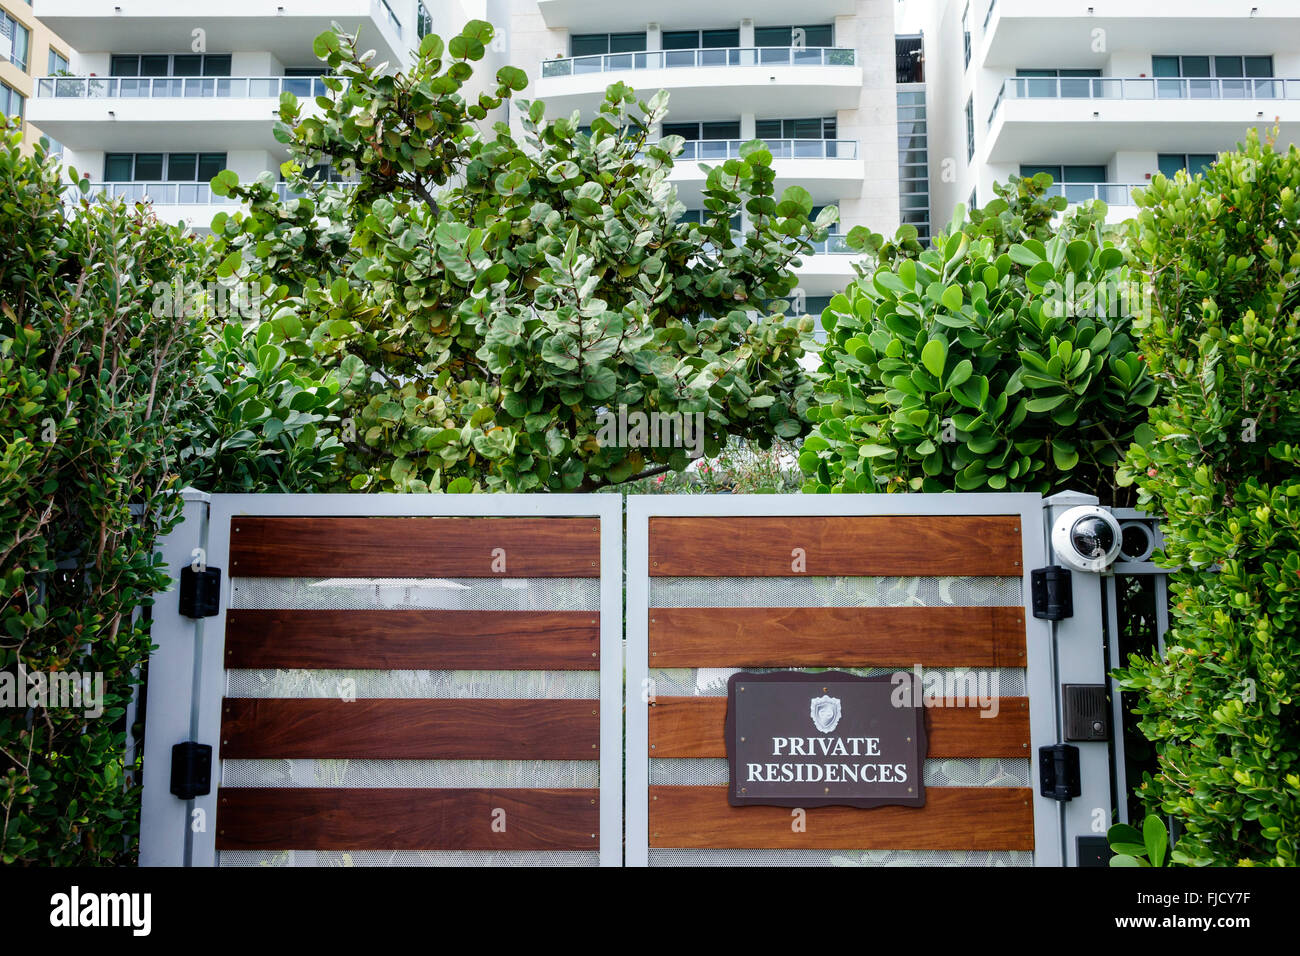 Miami Beach Florida,gate,sign,private residences,property,condominium residential apartment apartments building buildings housing,FL160226035 Stock Photo